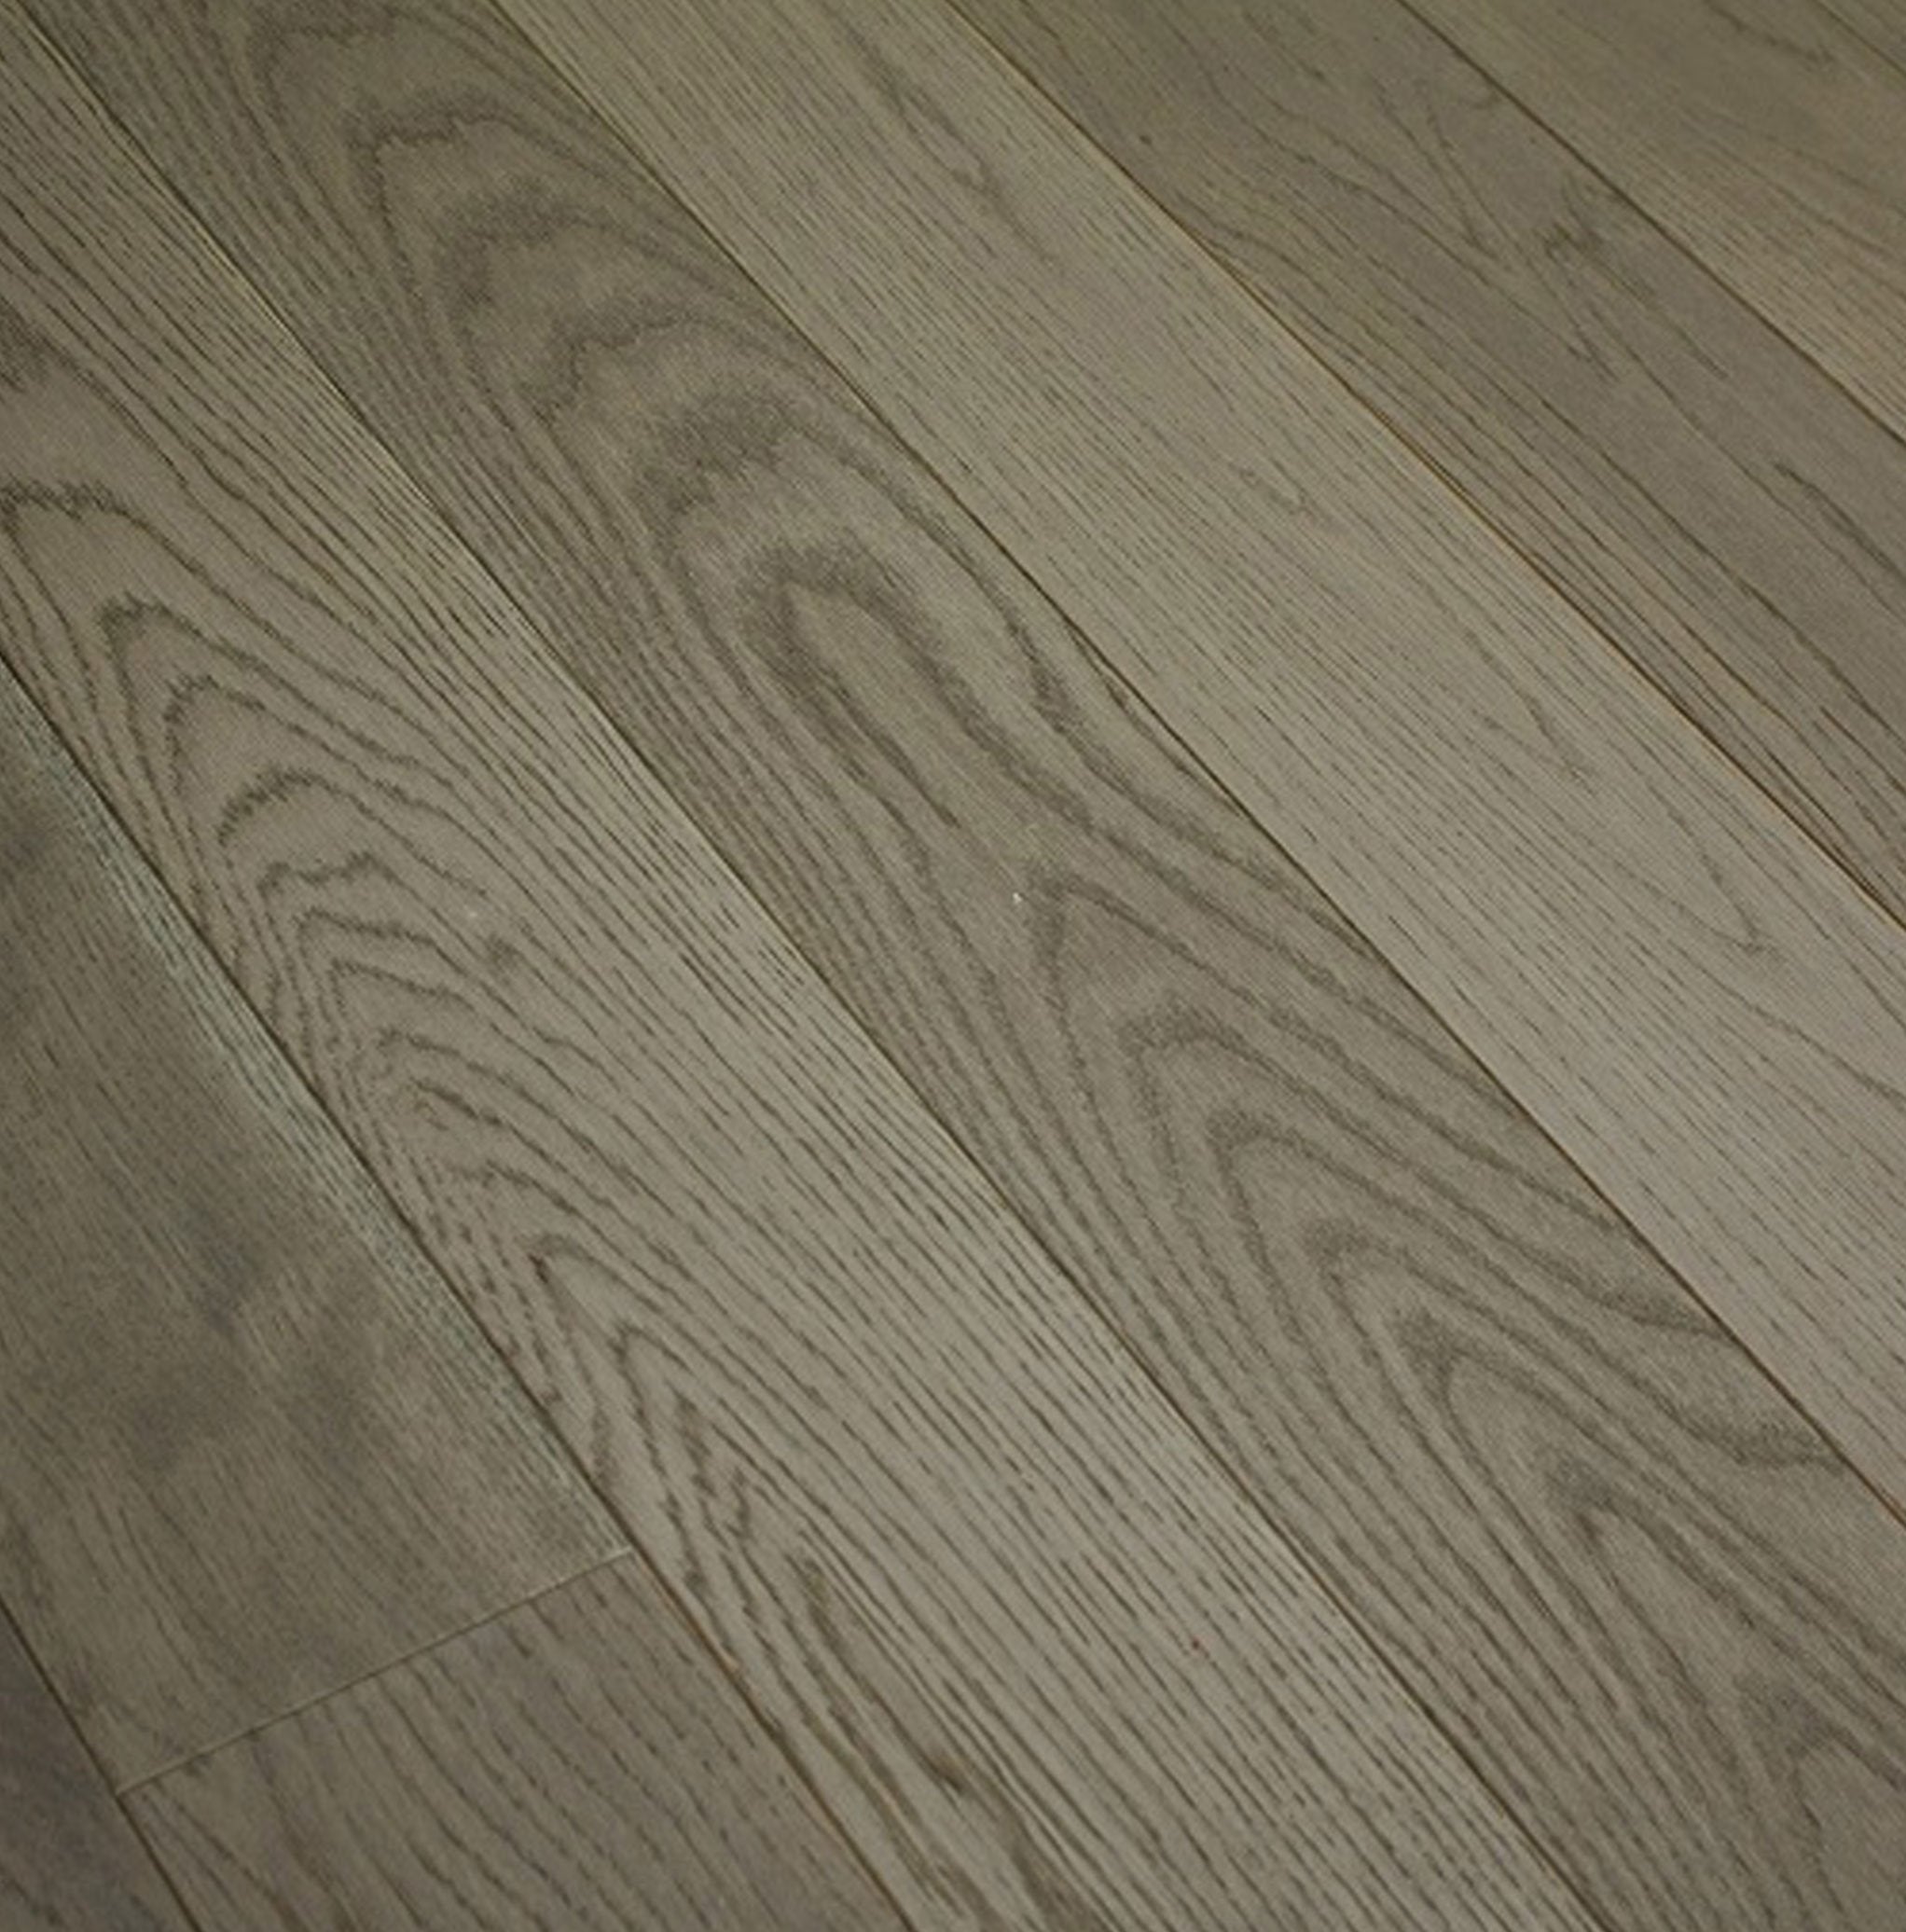 teka studio mist sawn white oak natural hardwood flooring plank stained light grey distributed by surface group international